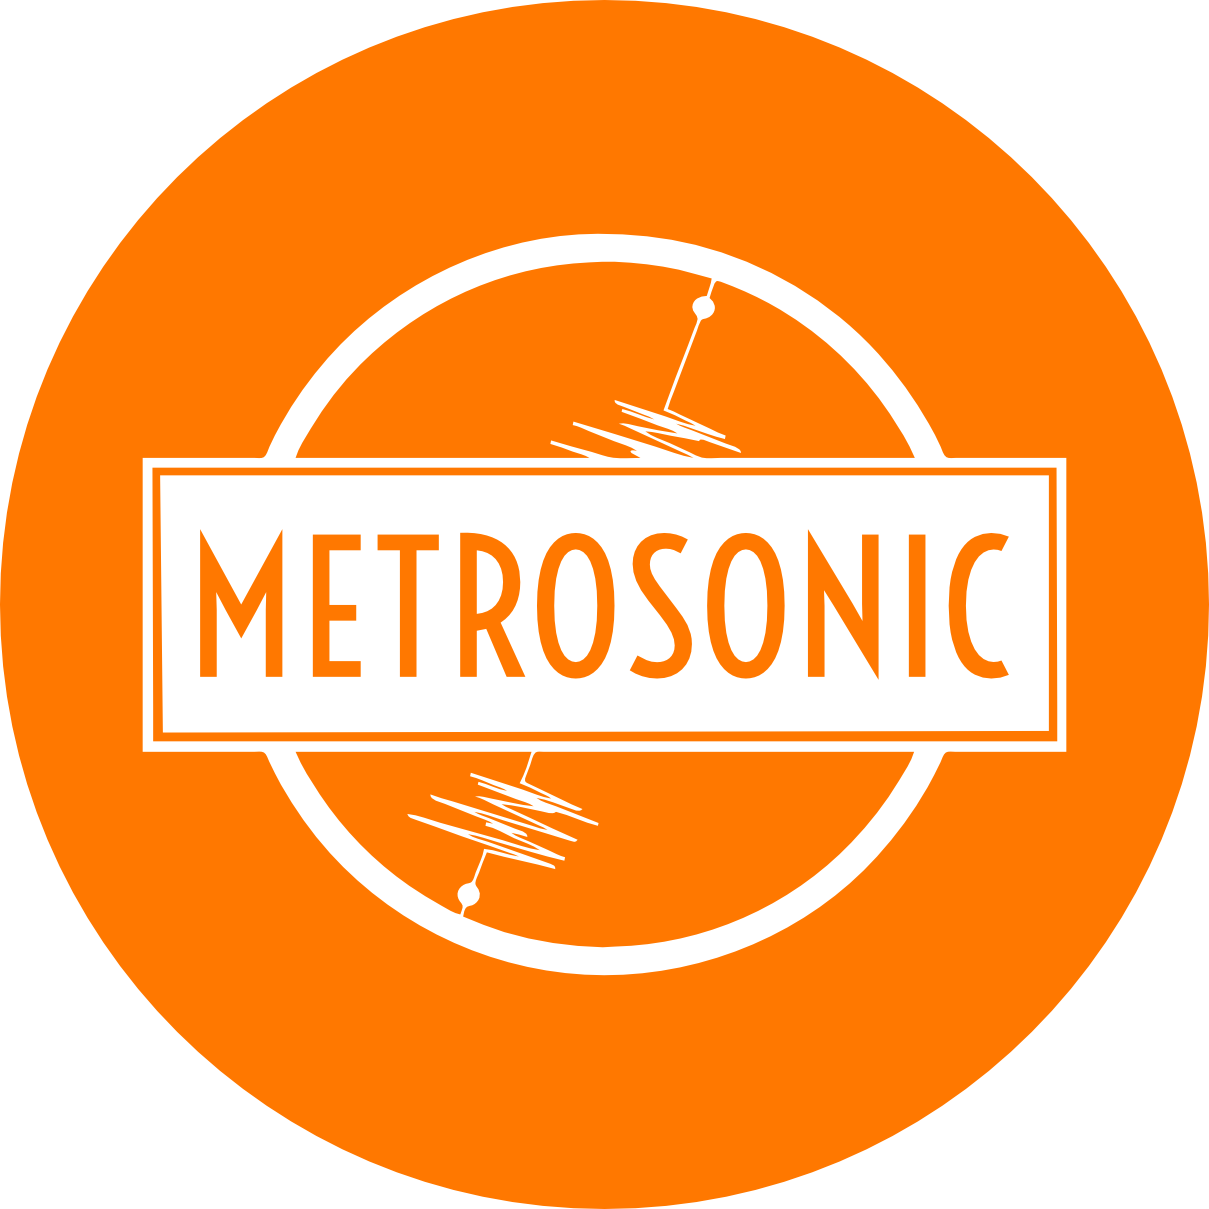 Metrosonic logo